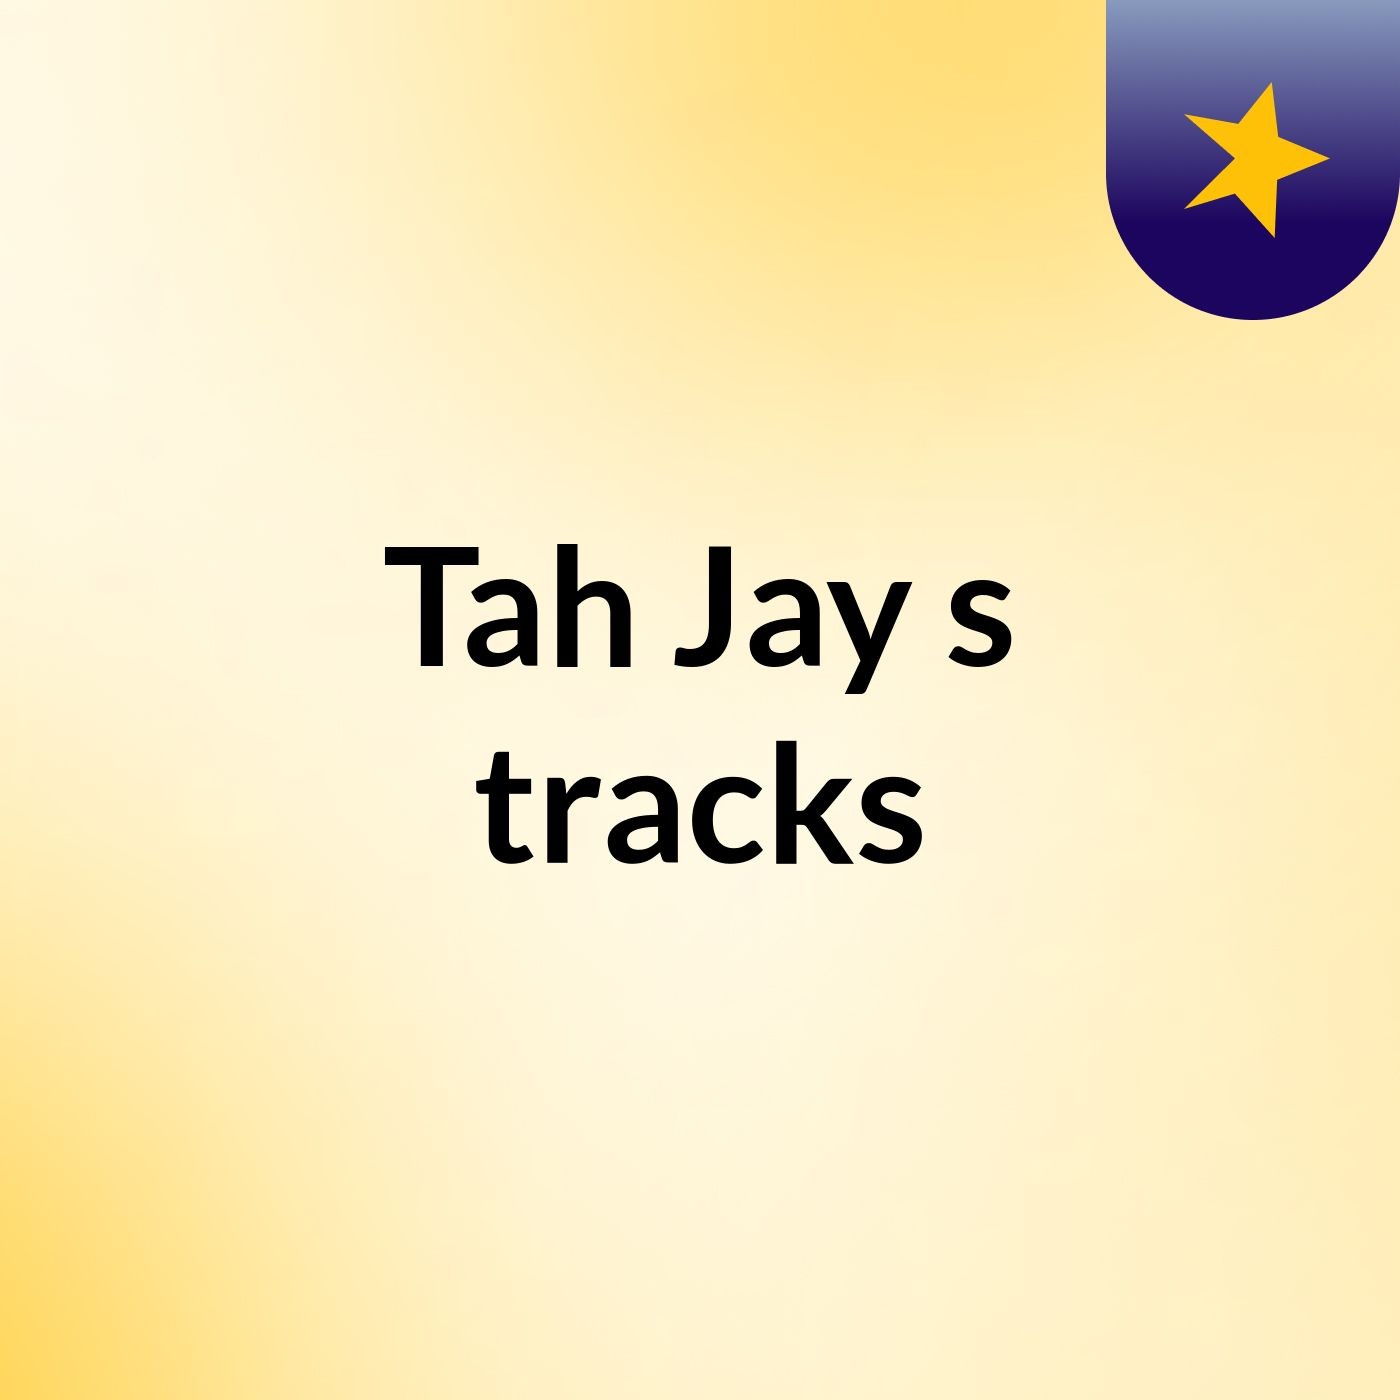 Tah Jay's tracks